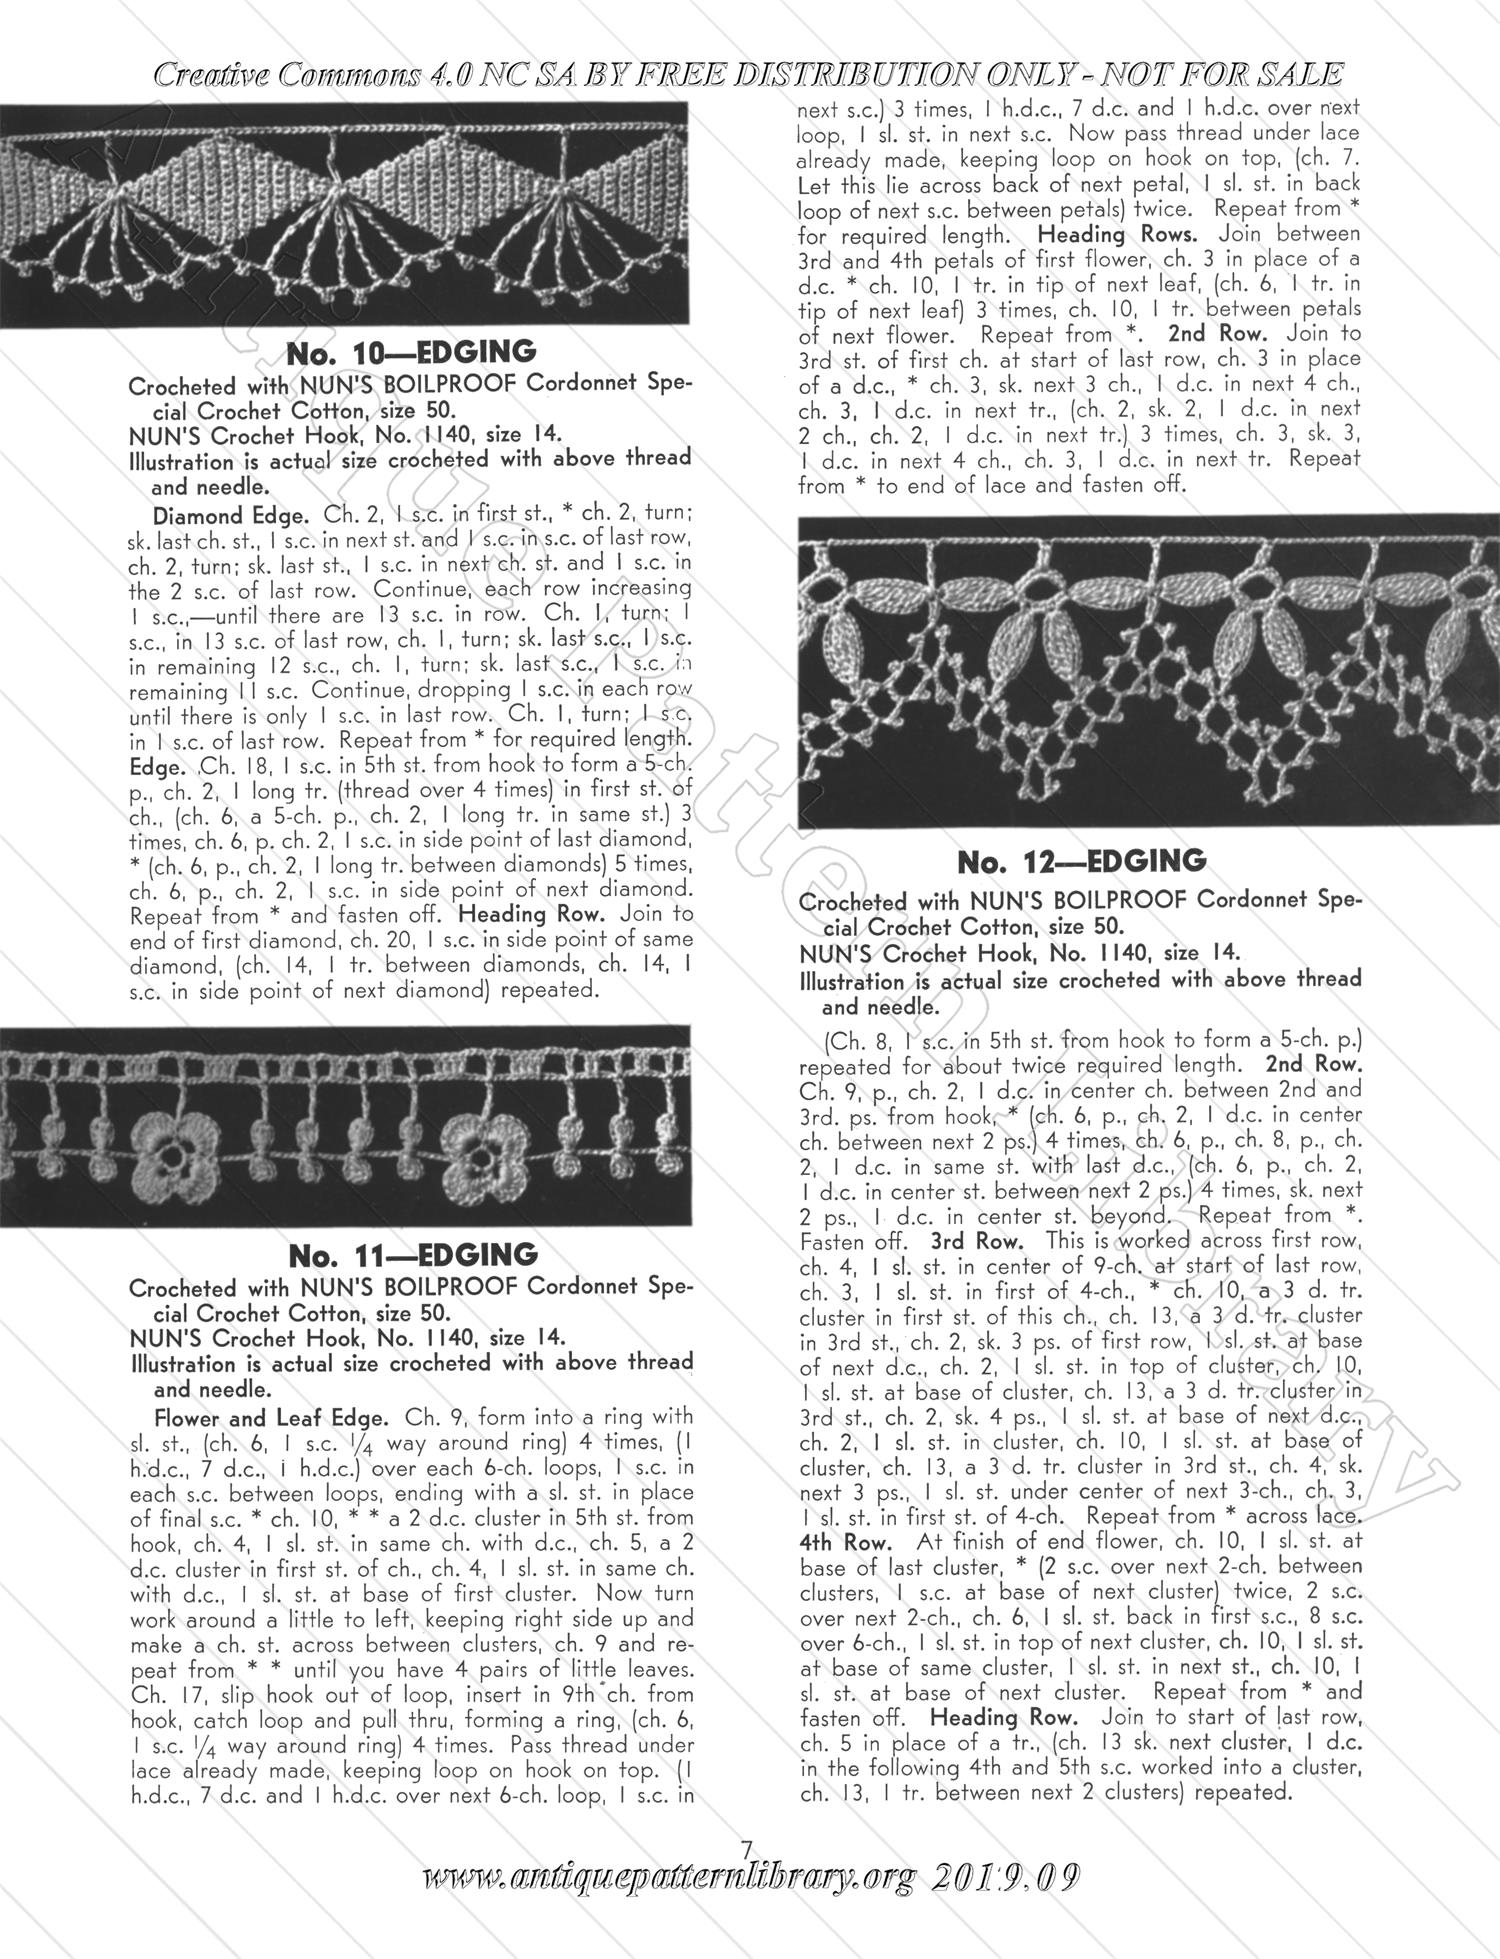 J-OS006 Nun's Crocheted Edgings and bandings